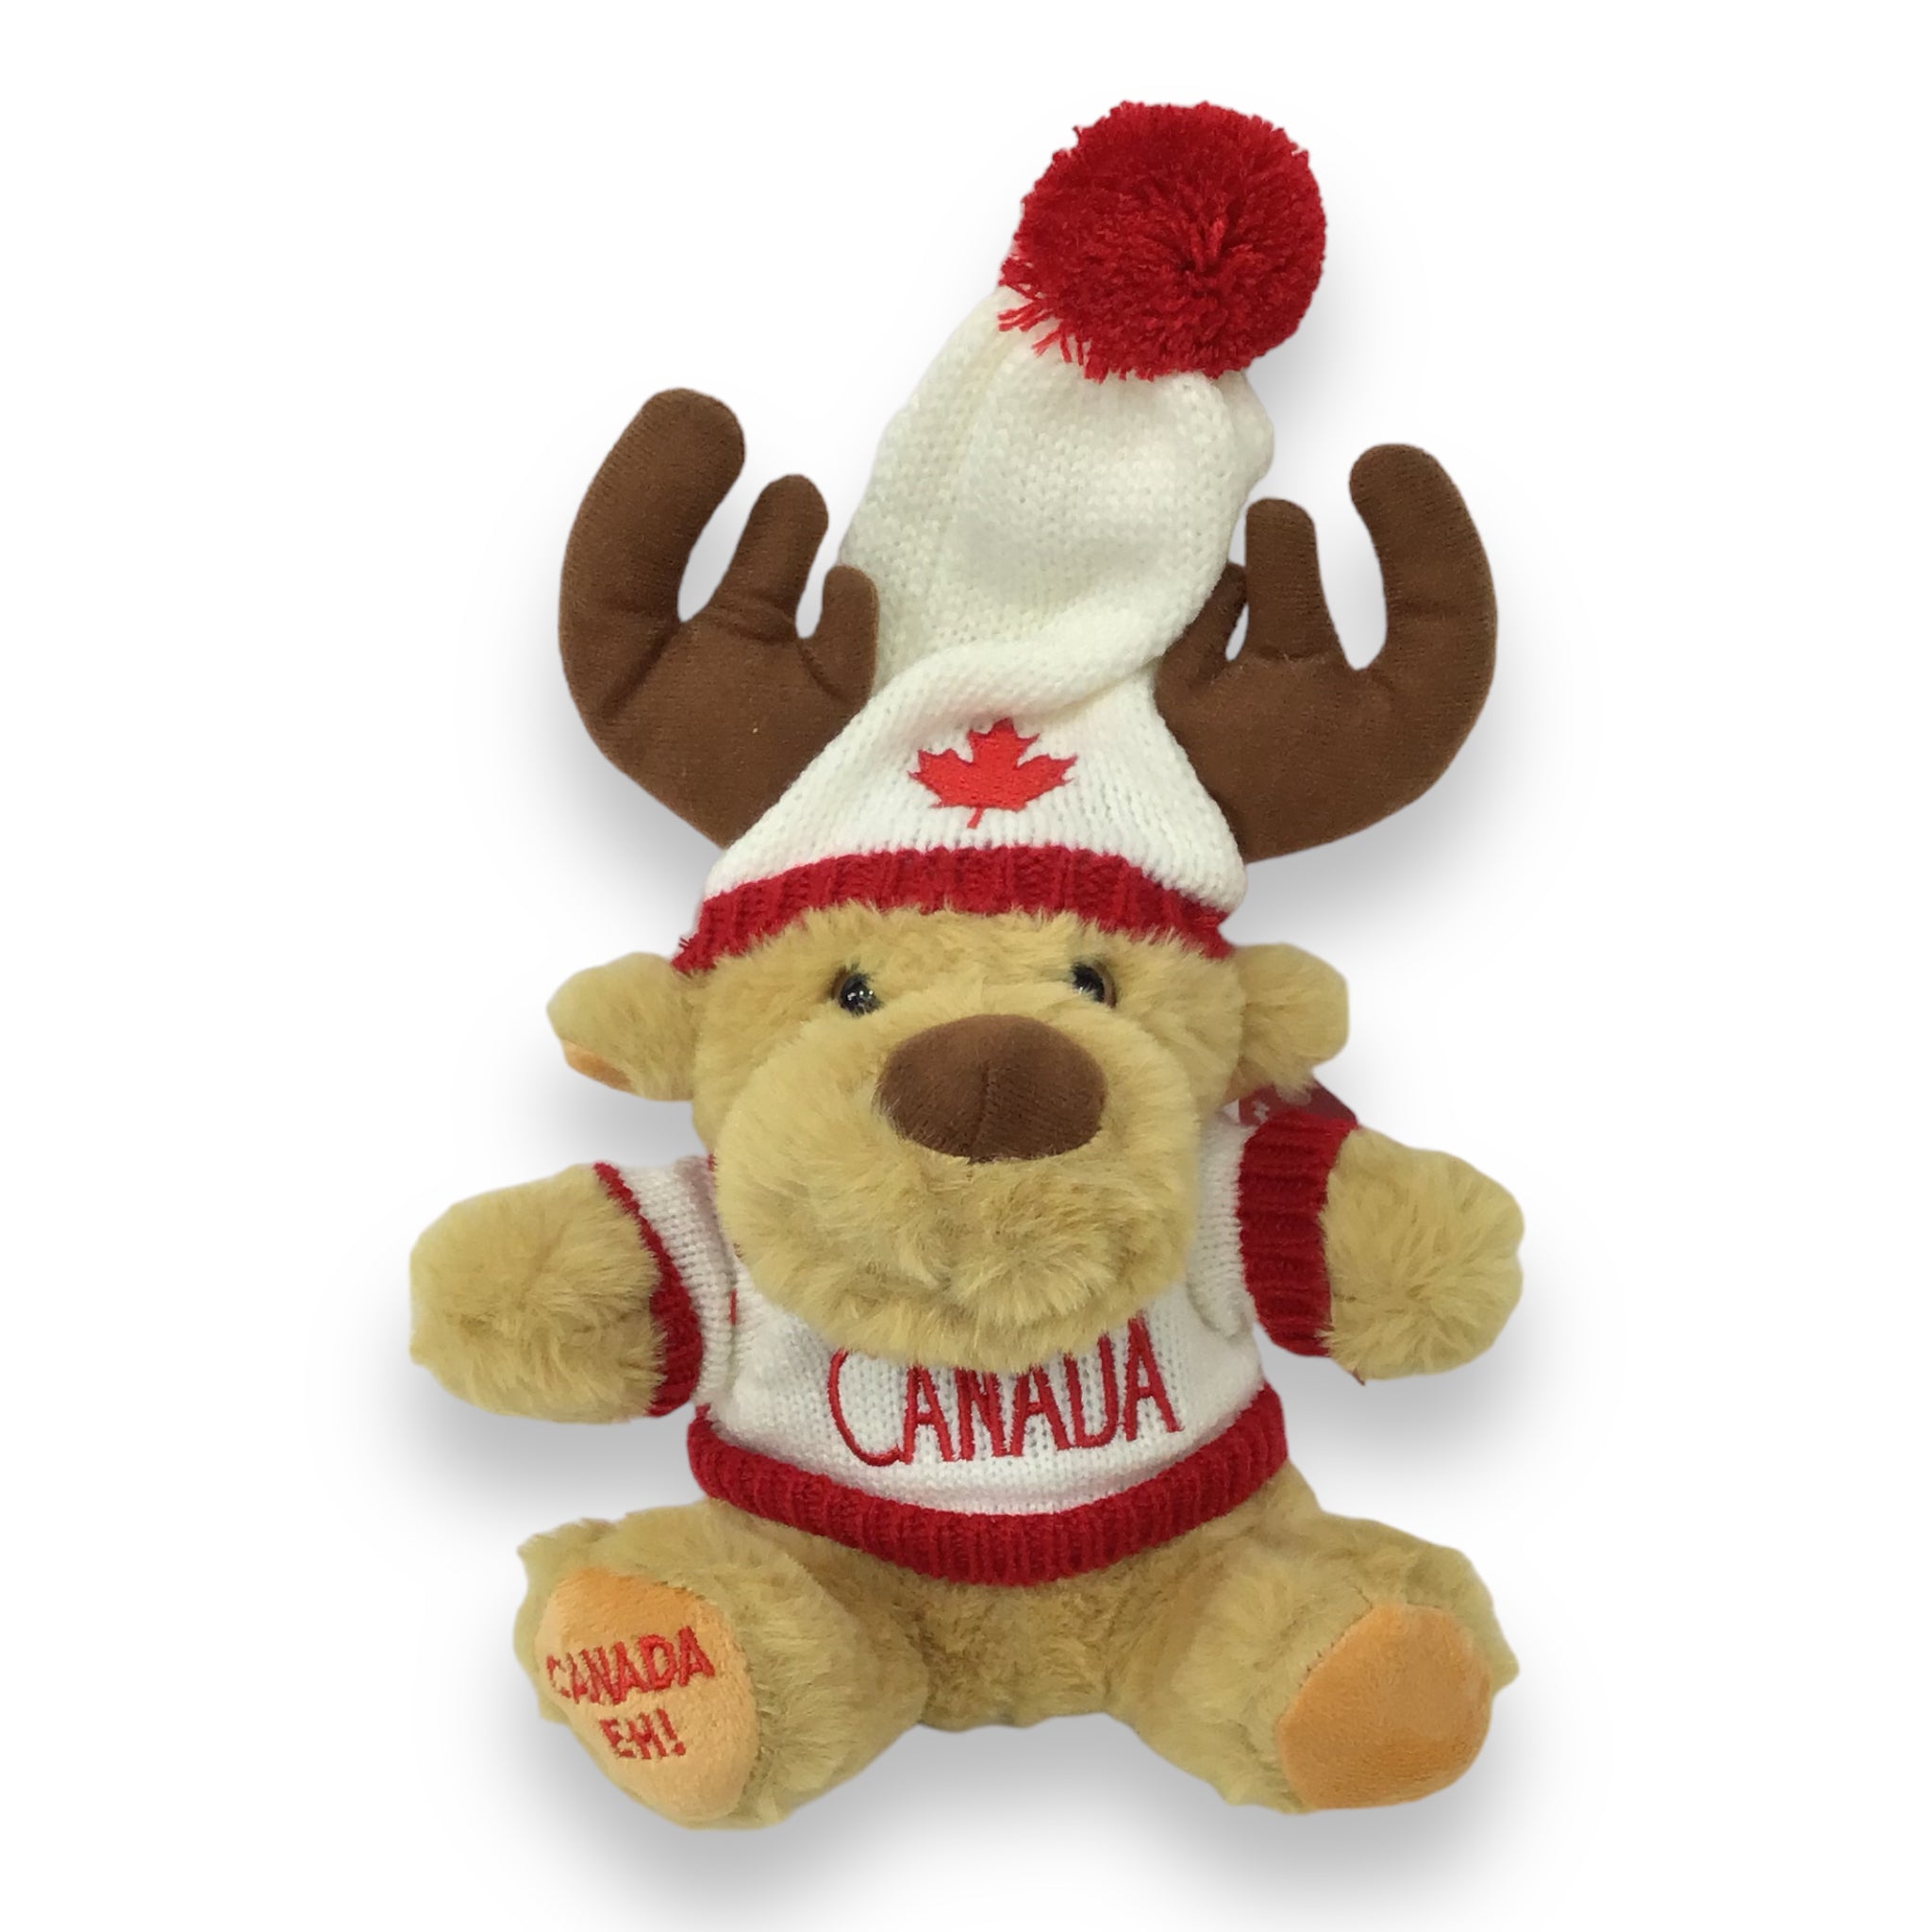 STUFFED ANIMAL POLAR BEAR - HUSKY -  MOOSE W/ CANADA RED AND WHITE MAPLE LEAF SWEATER & HAT PLUSH